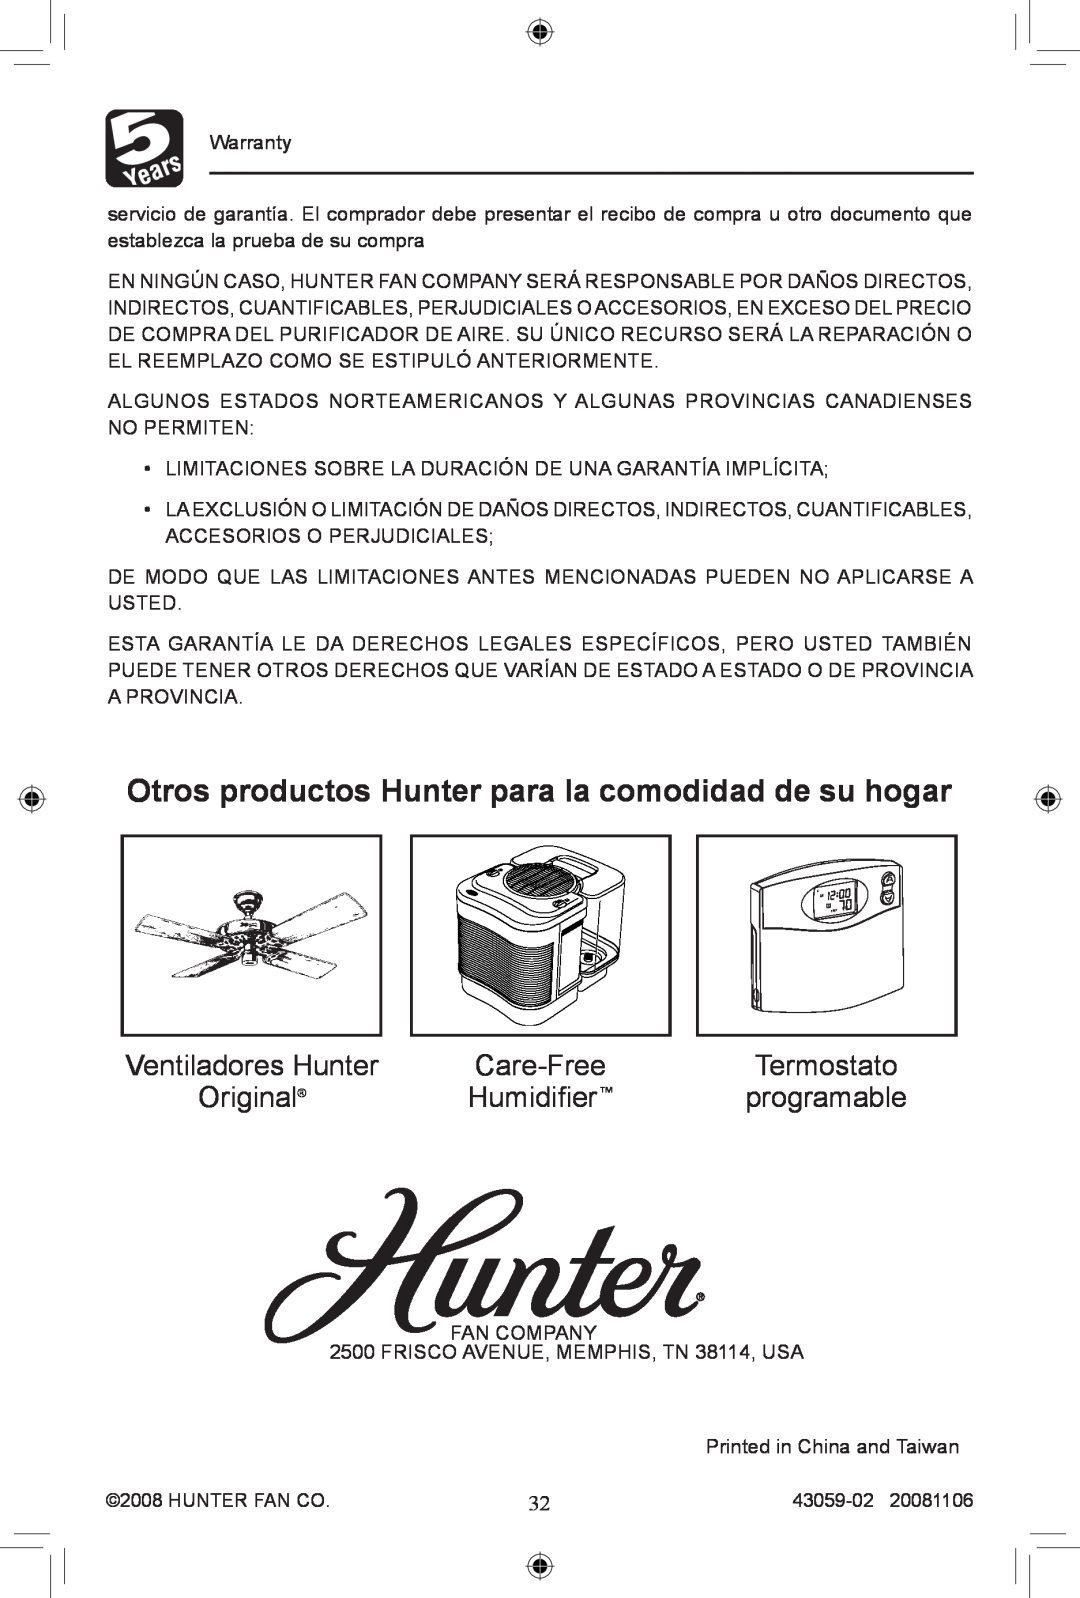 Hunter Fan 30770, 30771 manual Ventiladores Hunter, Care-Free, Termostato, Original, programable, Humidifier 